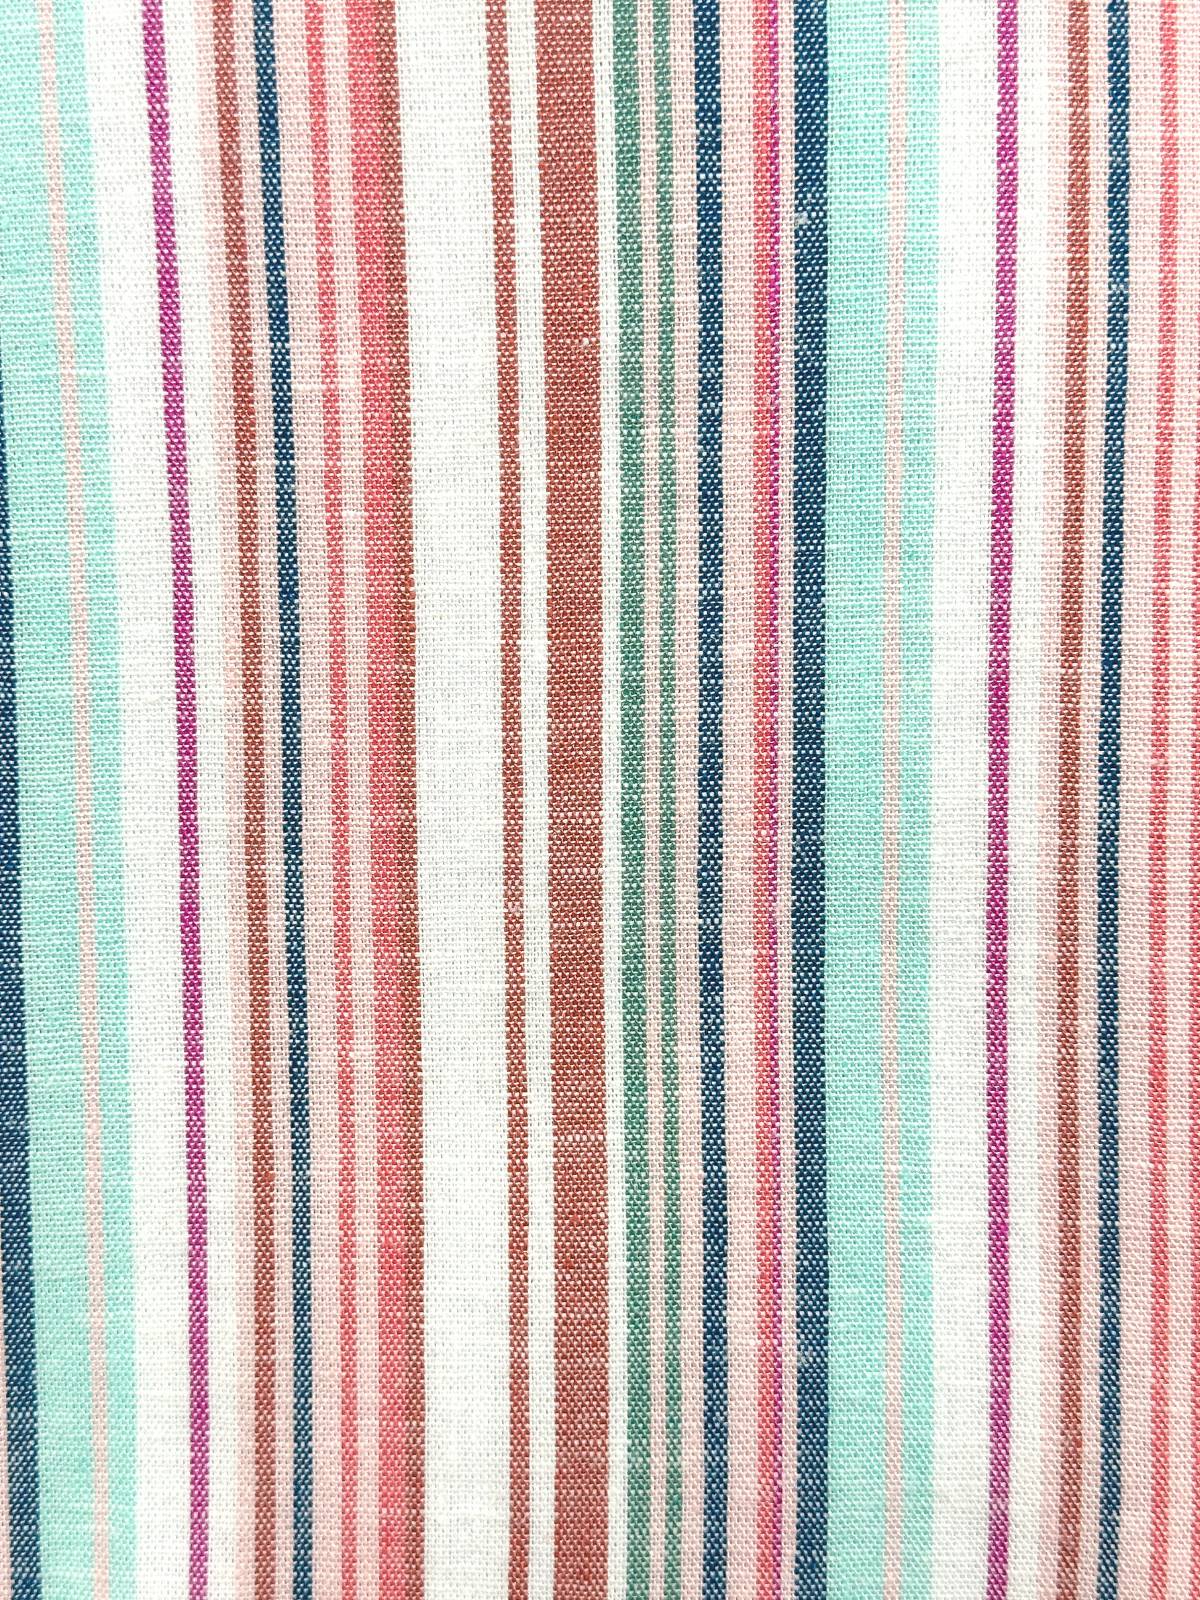 Lolly Striped Linen S/S Big Mens Shirt